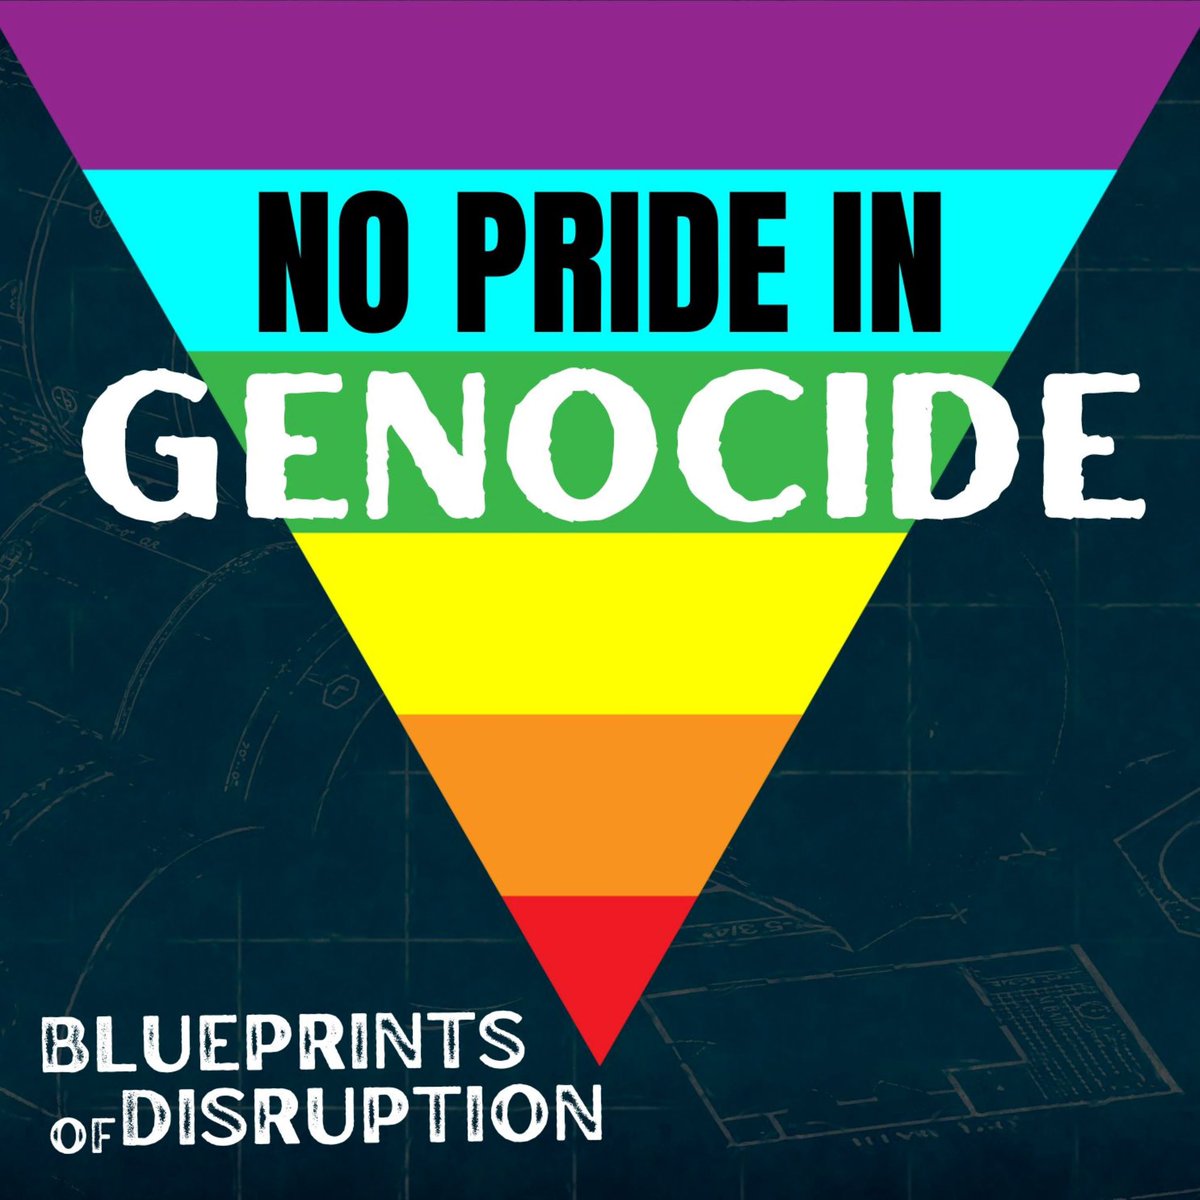 No Pride in Genocide podcast. Listen to @GaryWKinsman discuss his resignation from Pride Toronto here pod.fo/e/239603